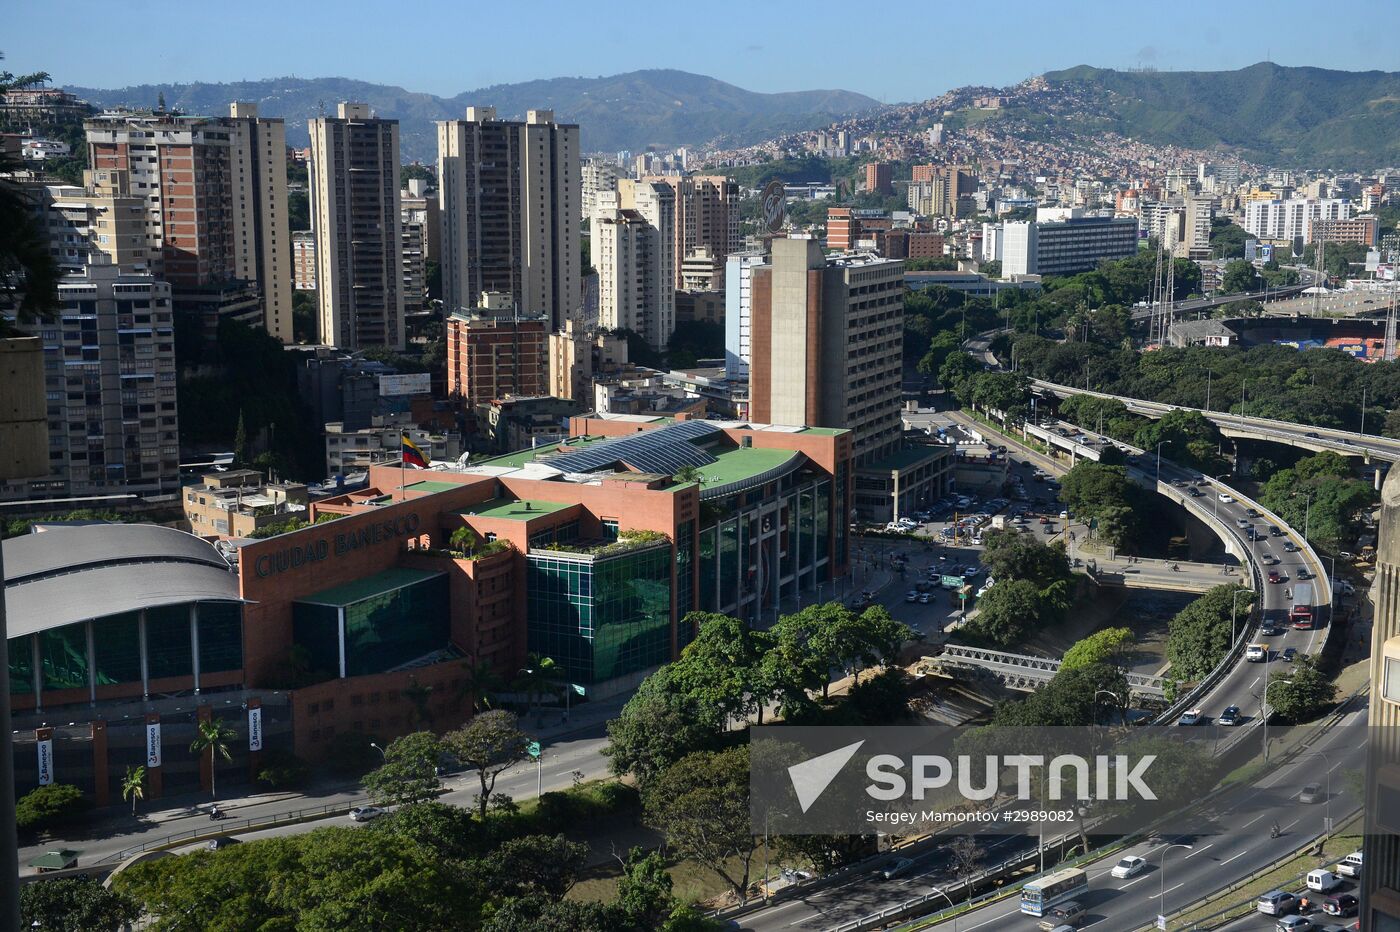 Cities of the world. Caracas, Venezuela